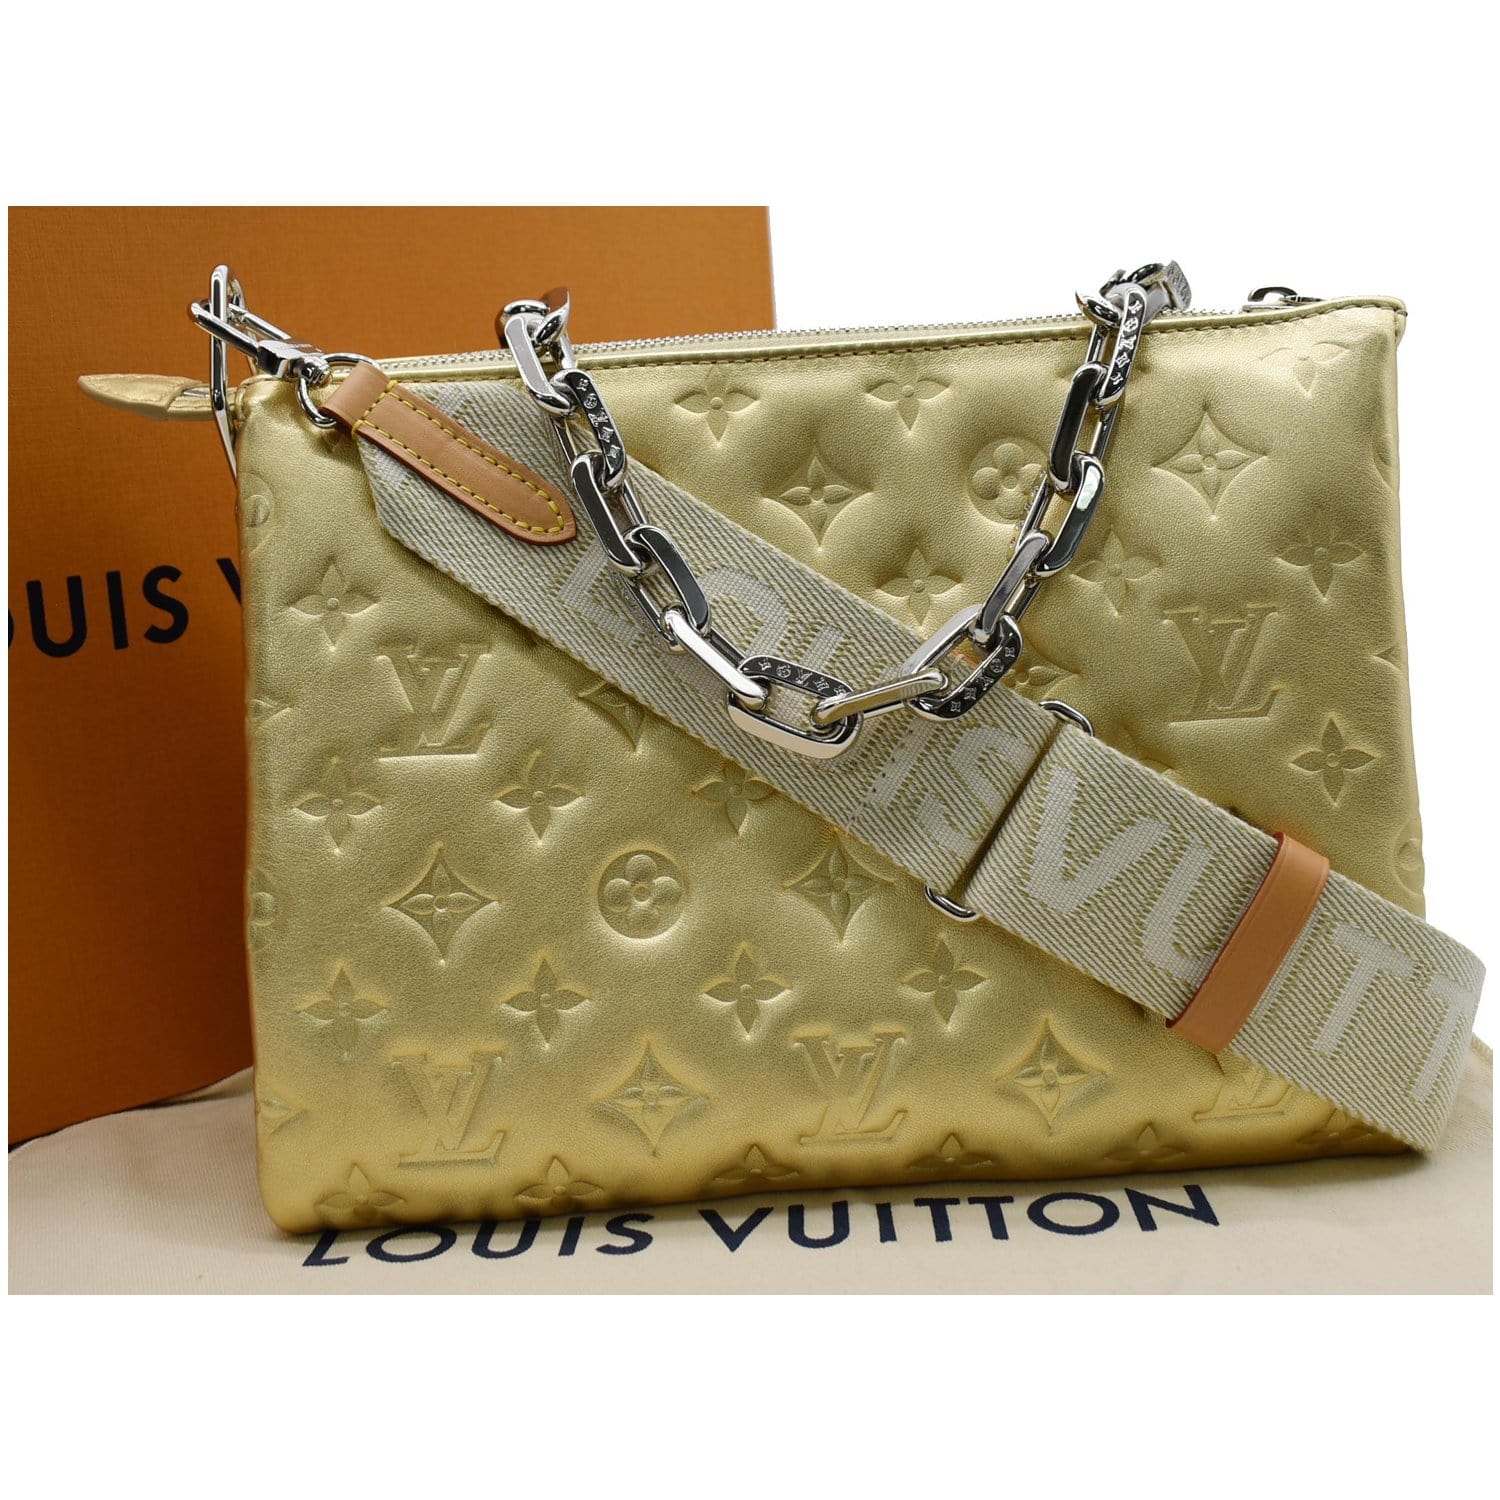 Preloved Louis Vuitton Monogram Coussin GM SD0044 032423 – KimmieBBags LLC